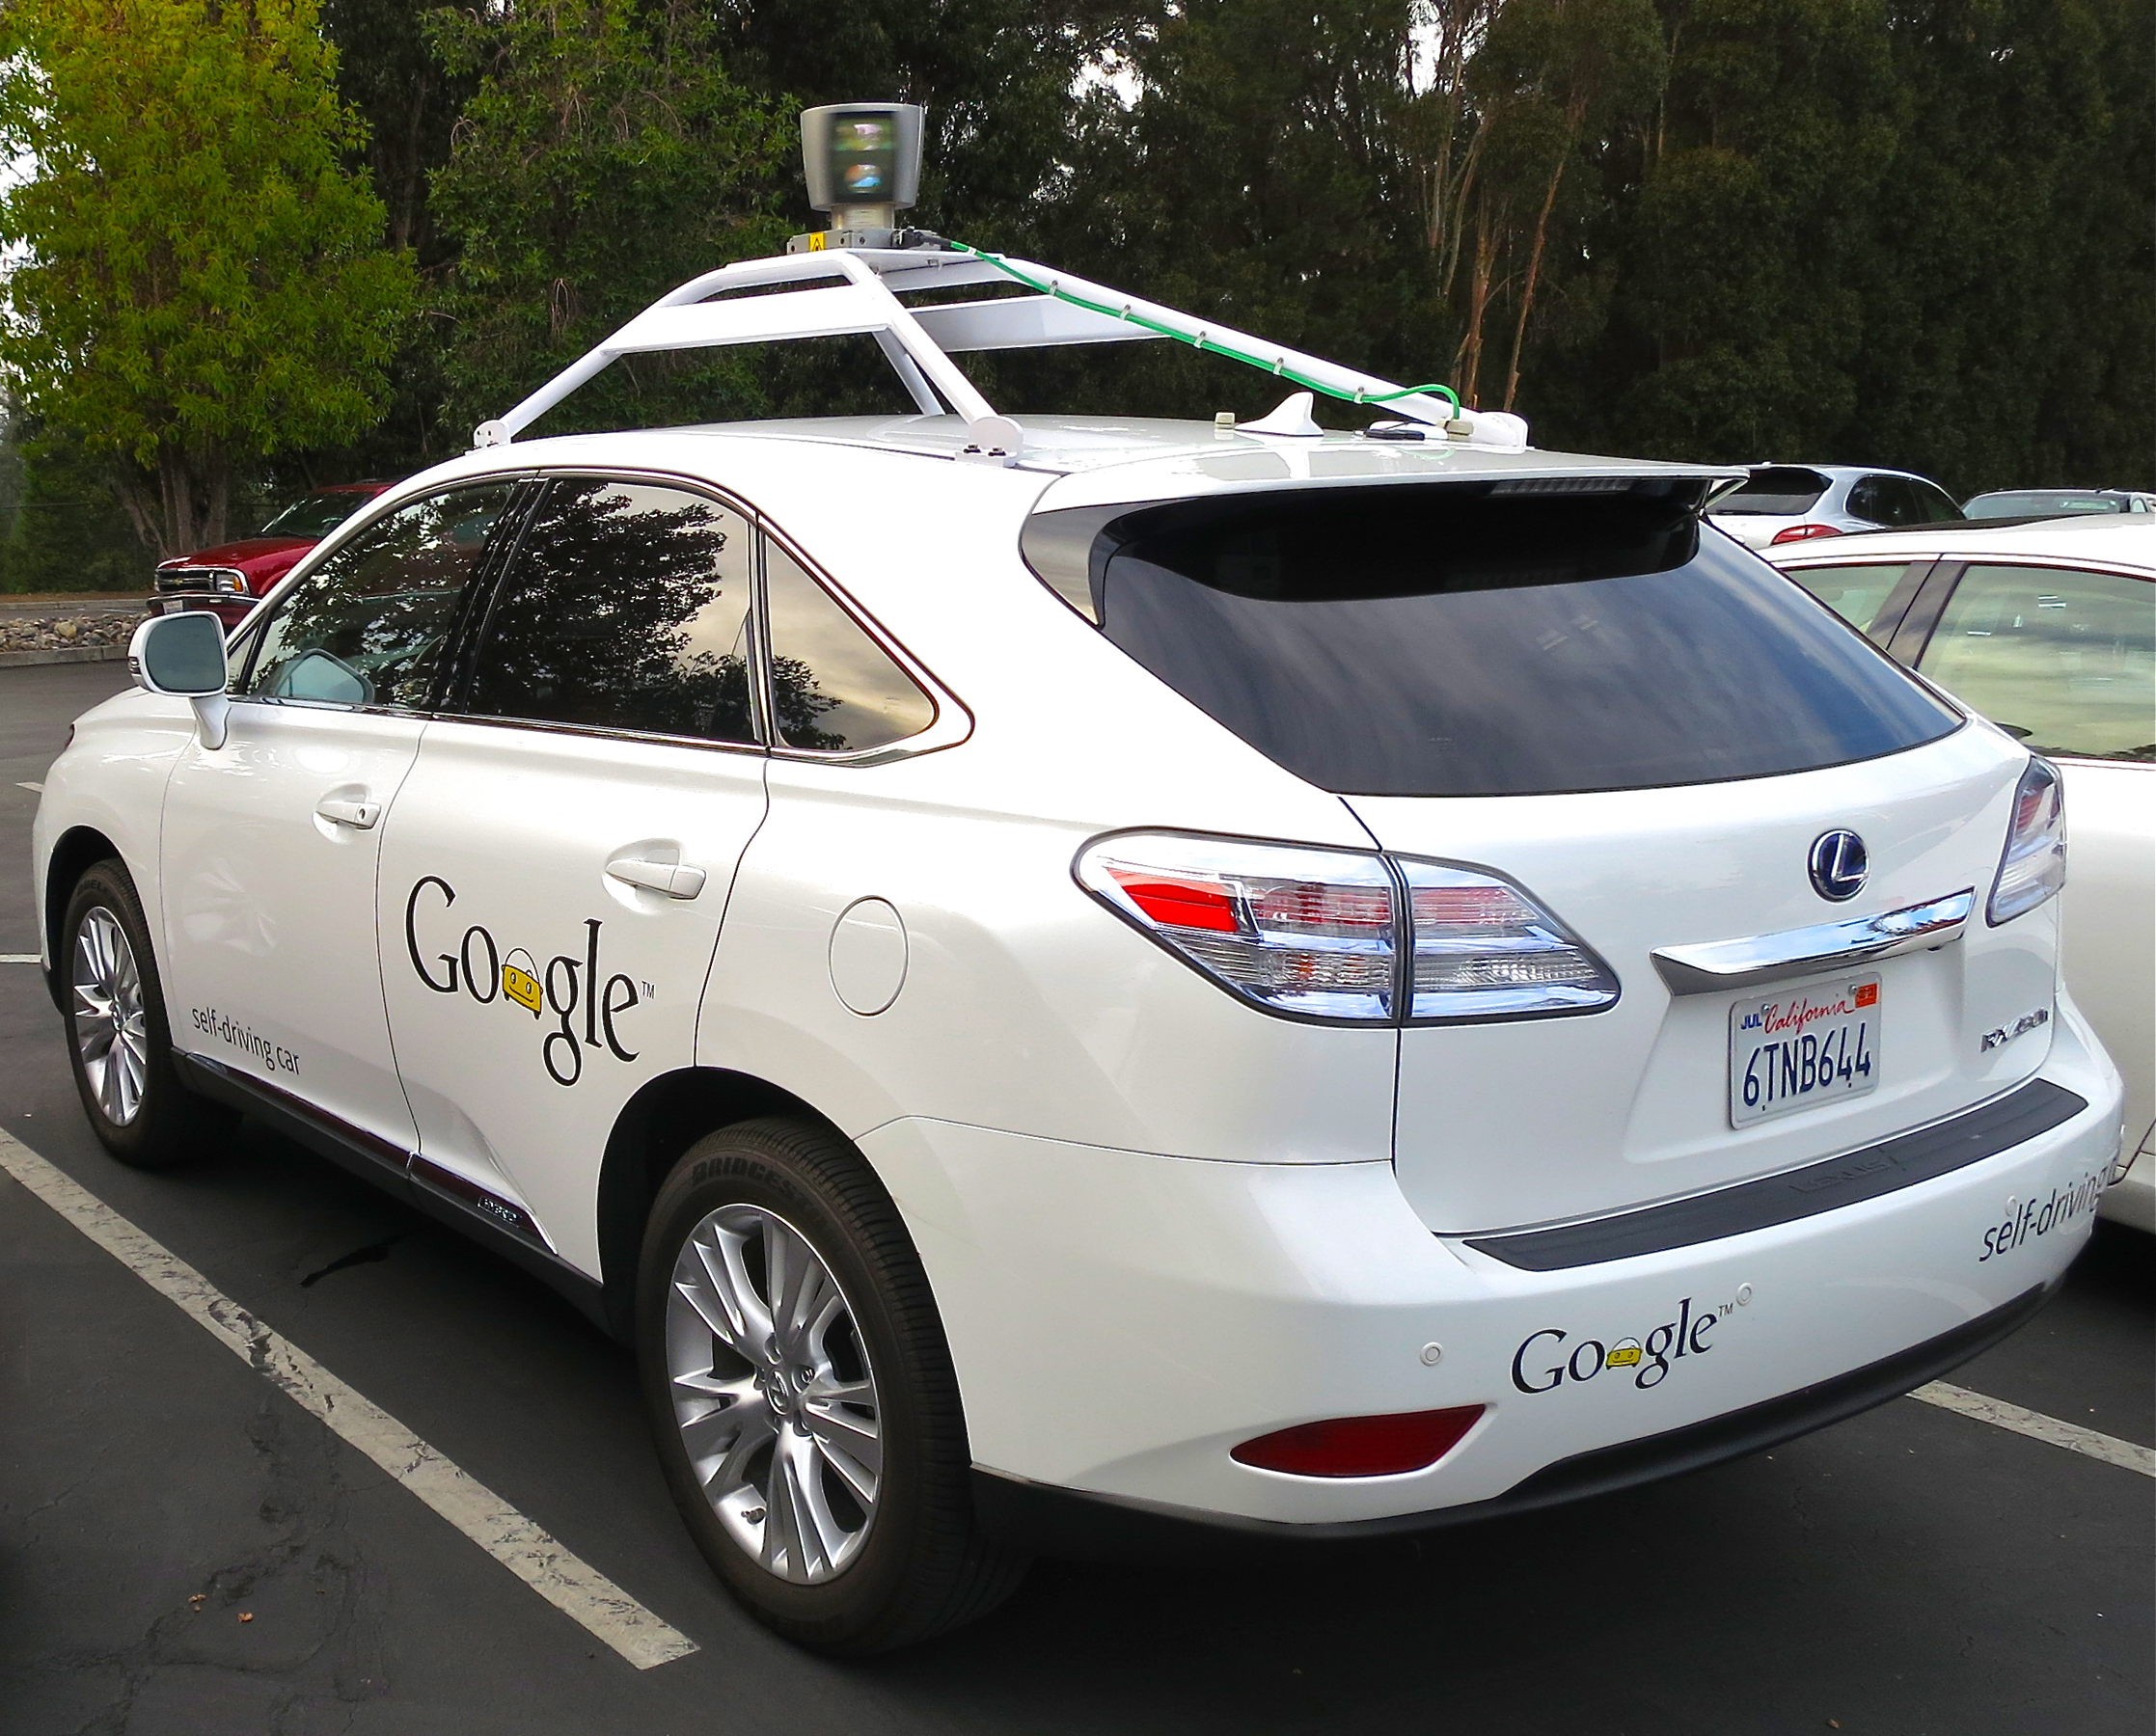 A Google Driverless Car